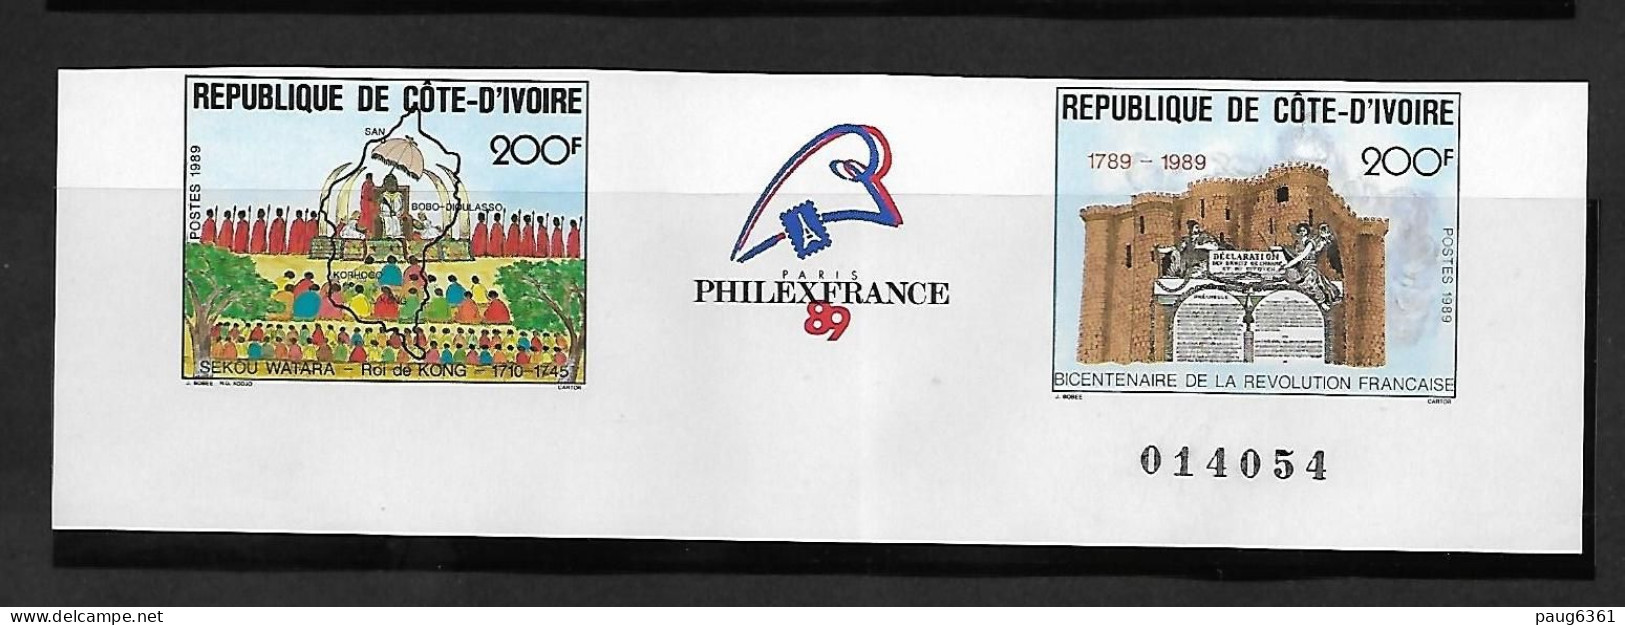 COTE D'IVOIRE 1989  SEKOU WATARA ET REVOLUTION FRANCAISE YVERT N°832A NON DENTELE  NEUF MNH** - French Revolution